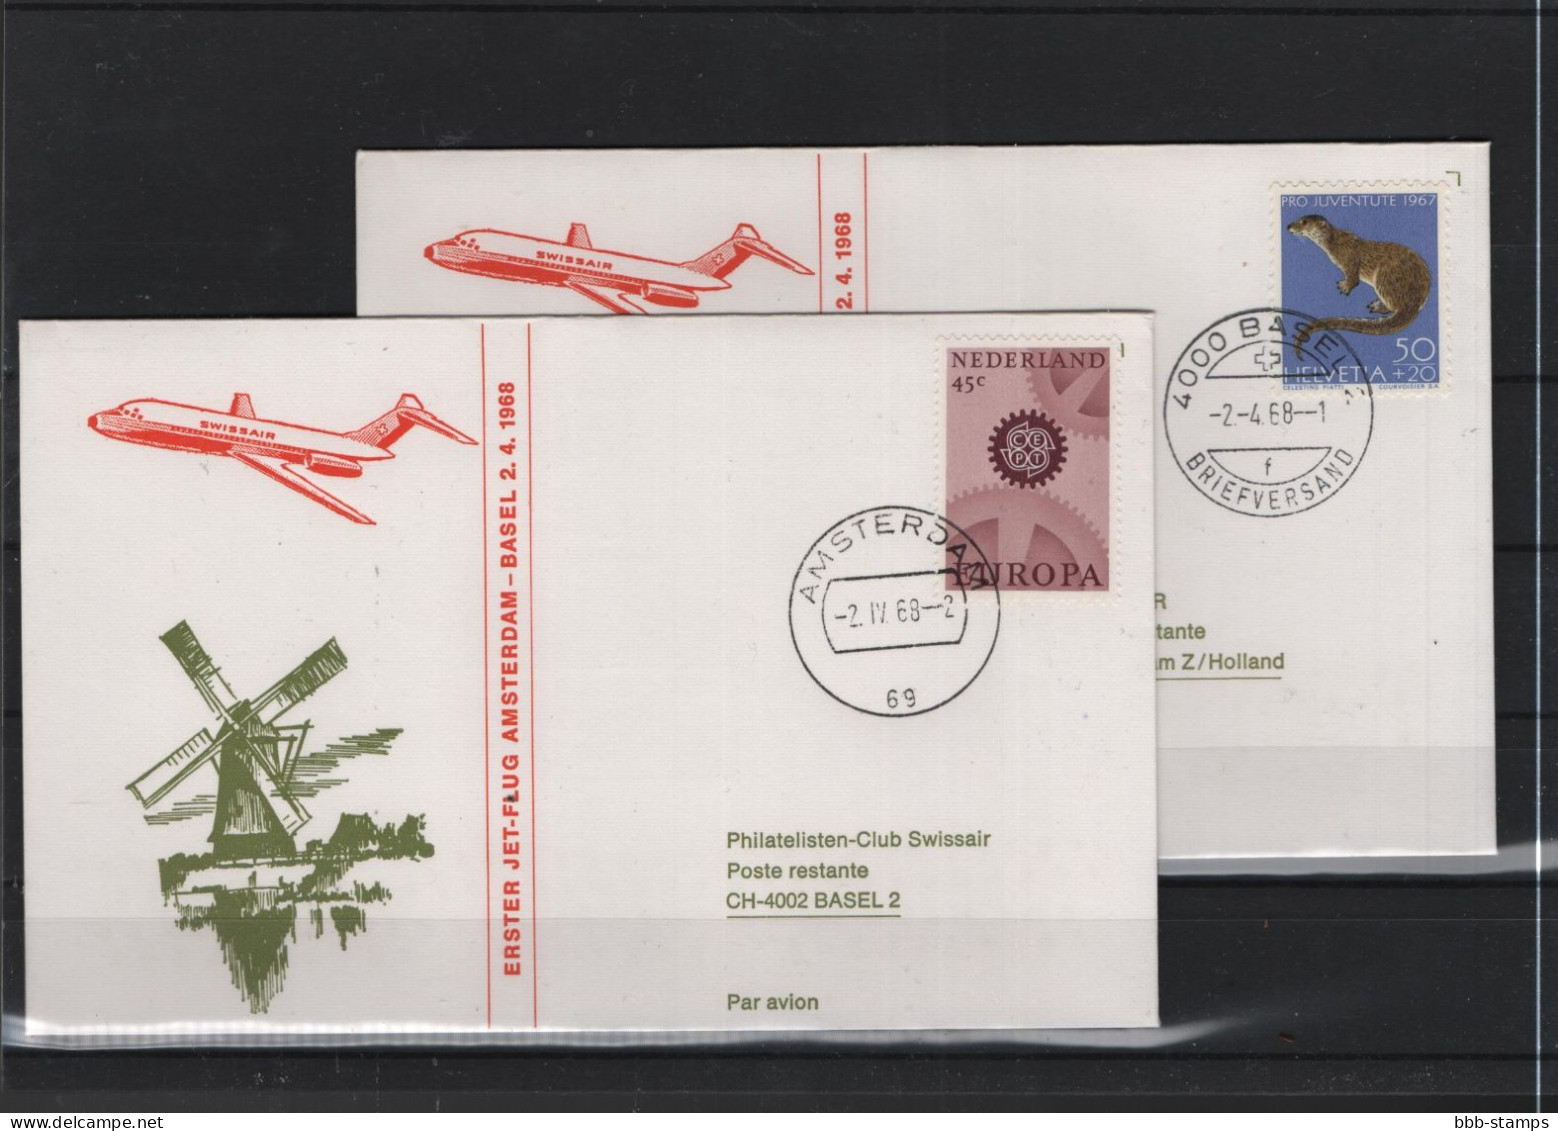 Schweiz Air Mail Swissair  FFC  2.4.1968 Basel - Amsterdam VV - Primi Voli